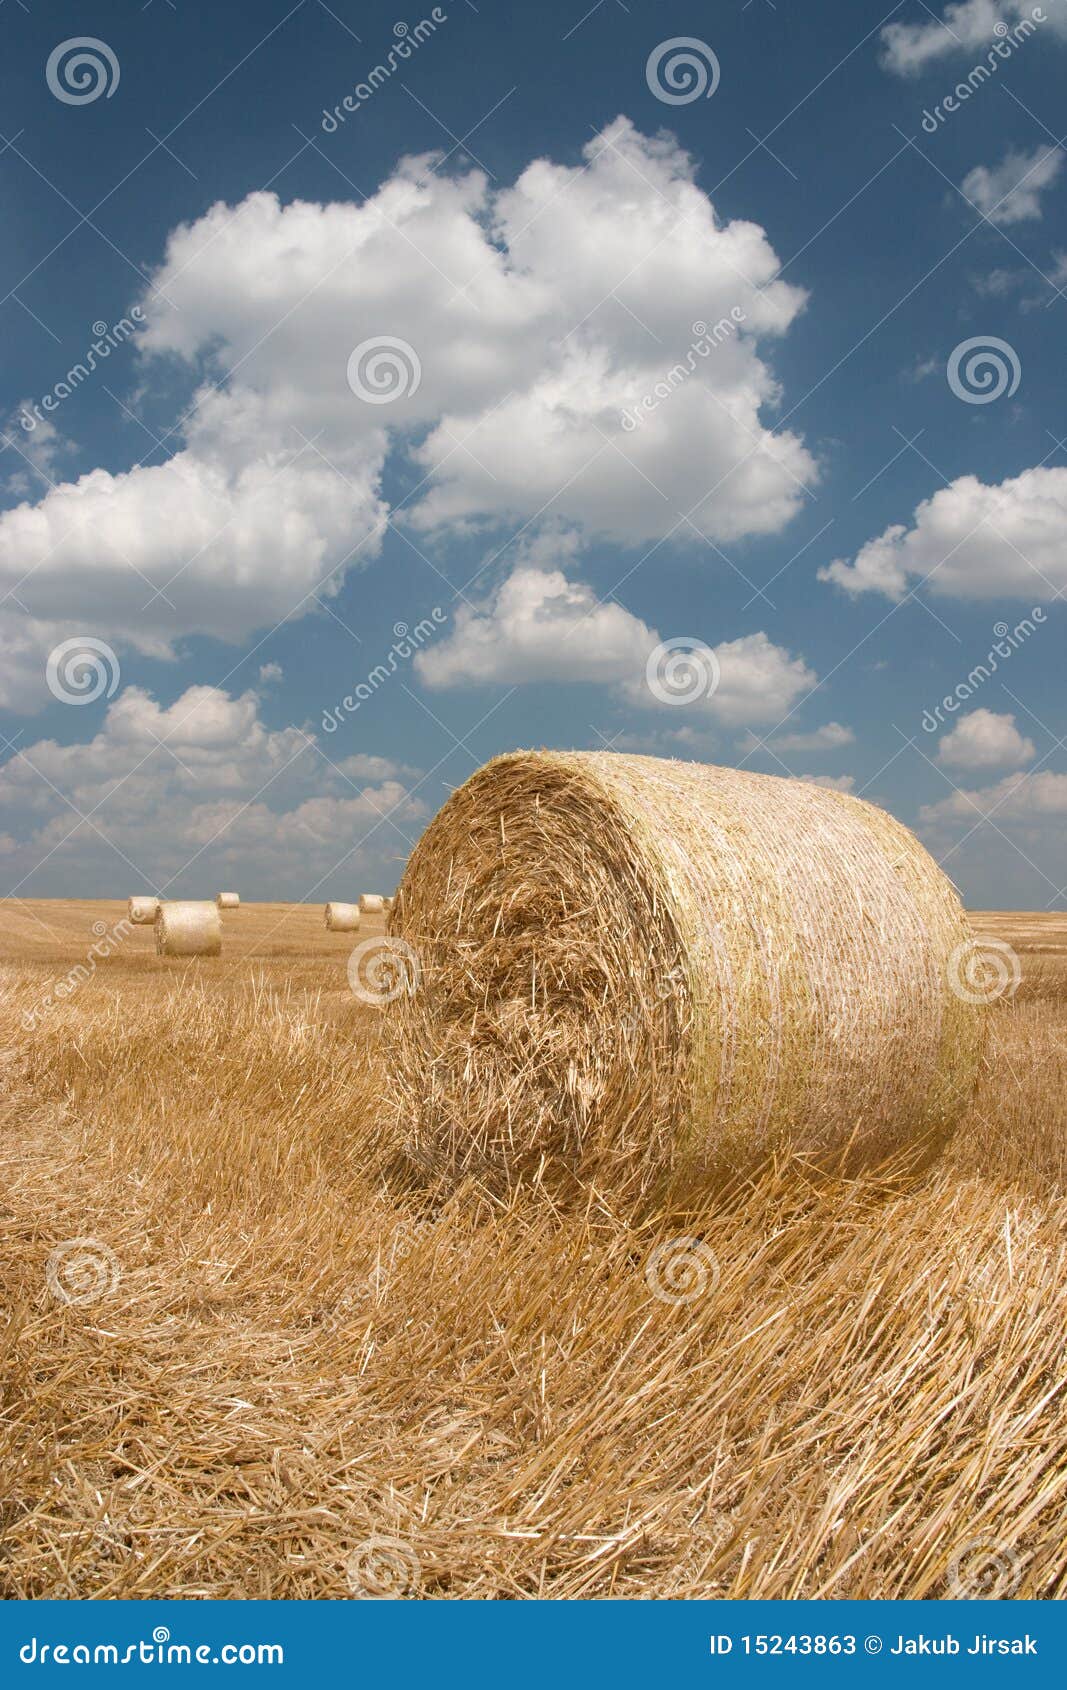 agriculture - haystack